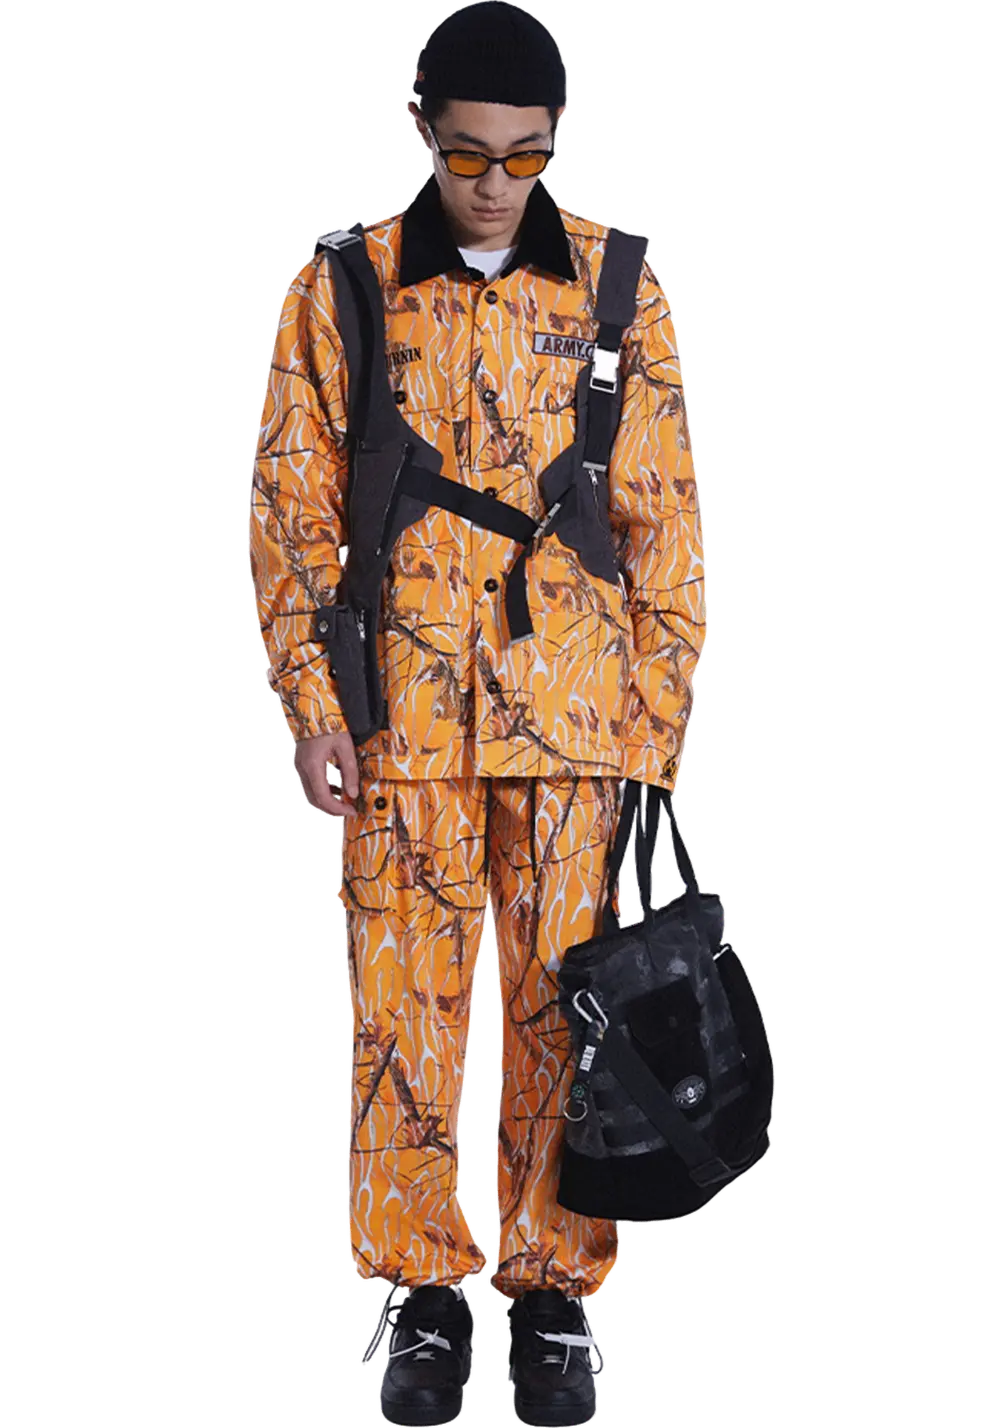 Fire Pattern Camouflage Combat Pants - PSYLOS 1, Fire Pattern Camouflage Combat Pants, Pants, Burnin, PSYLOS 1